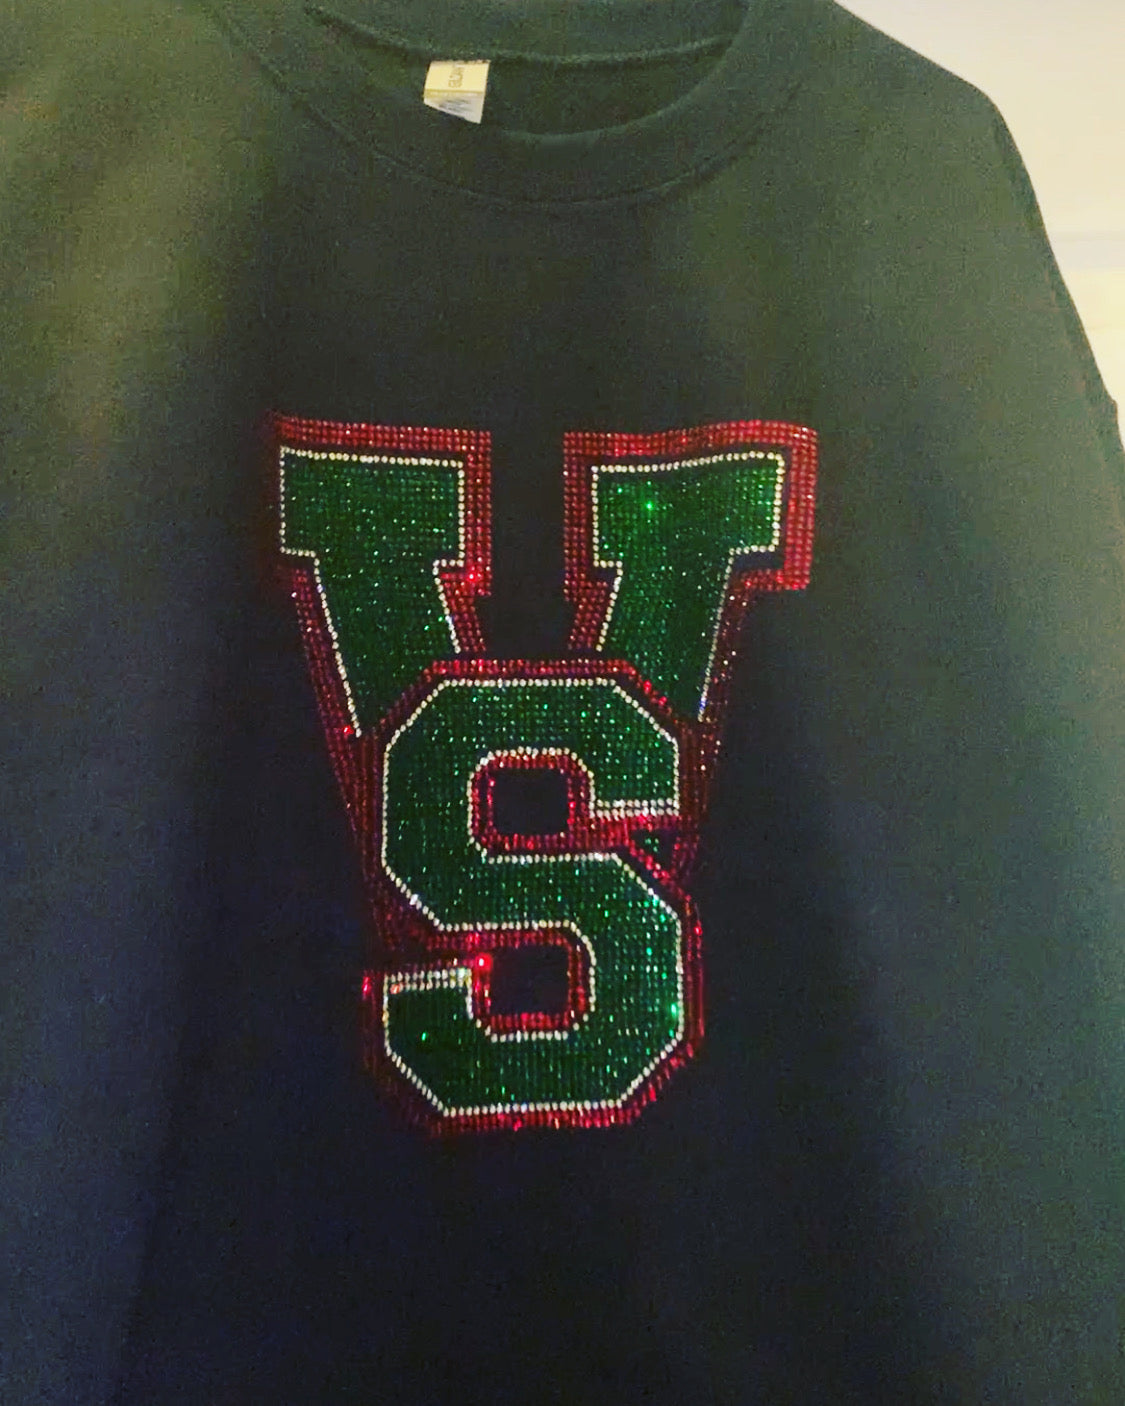 MS Valley State University Rhinestone Sweatshirt